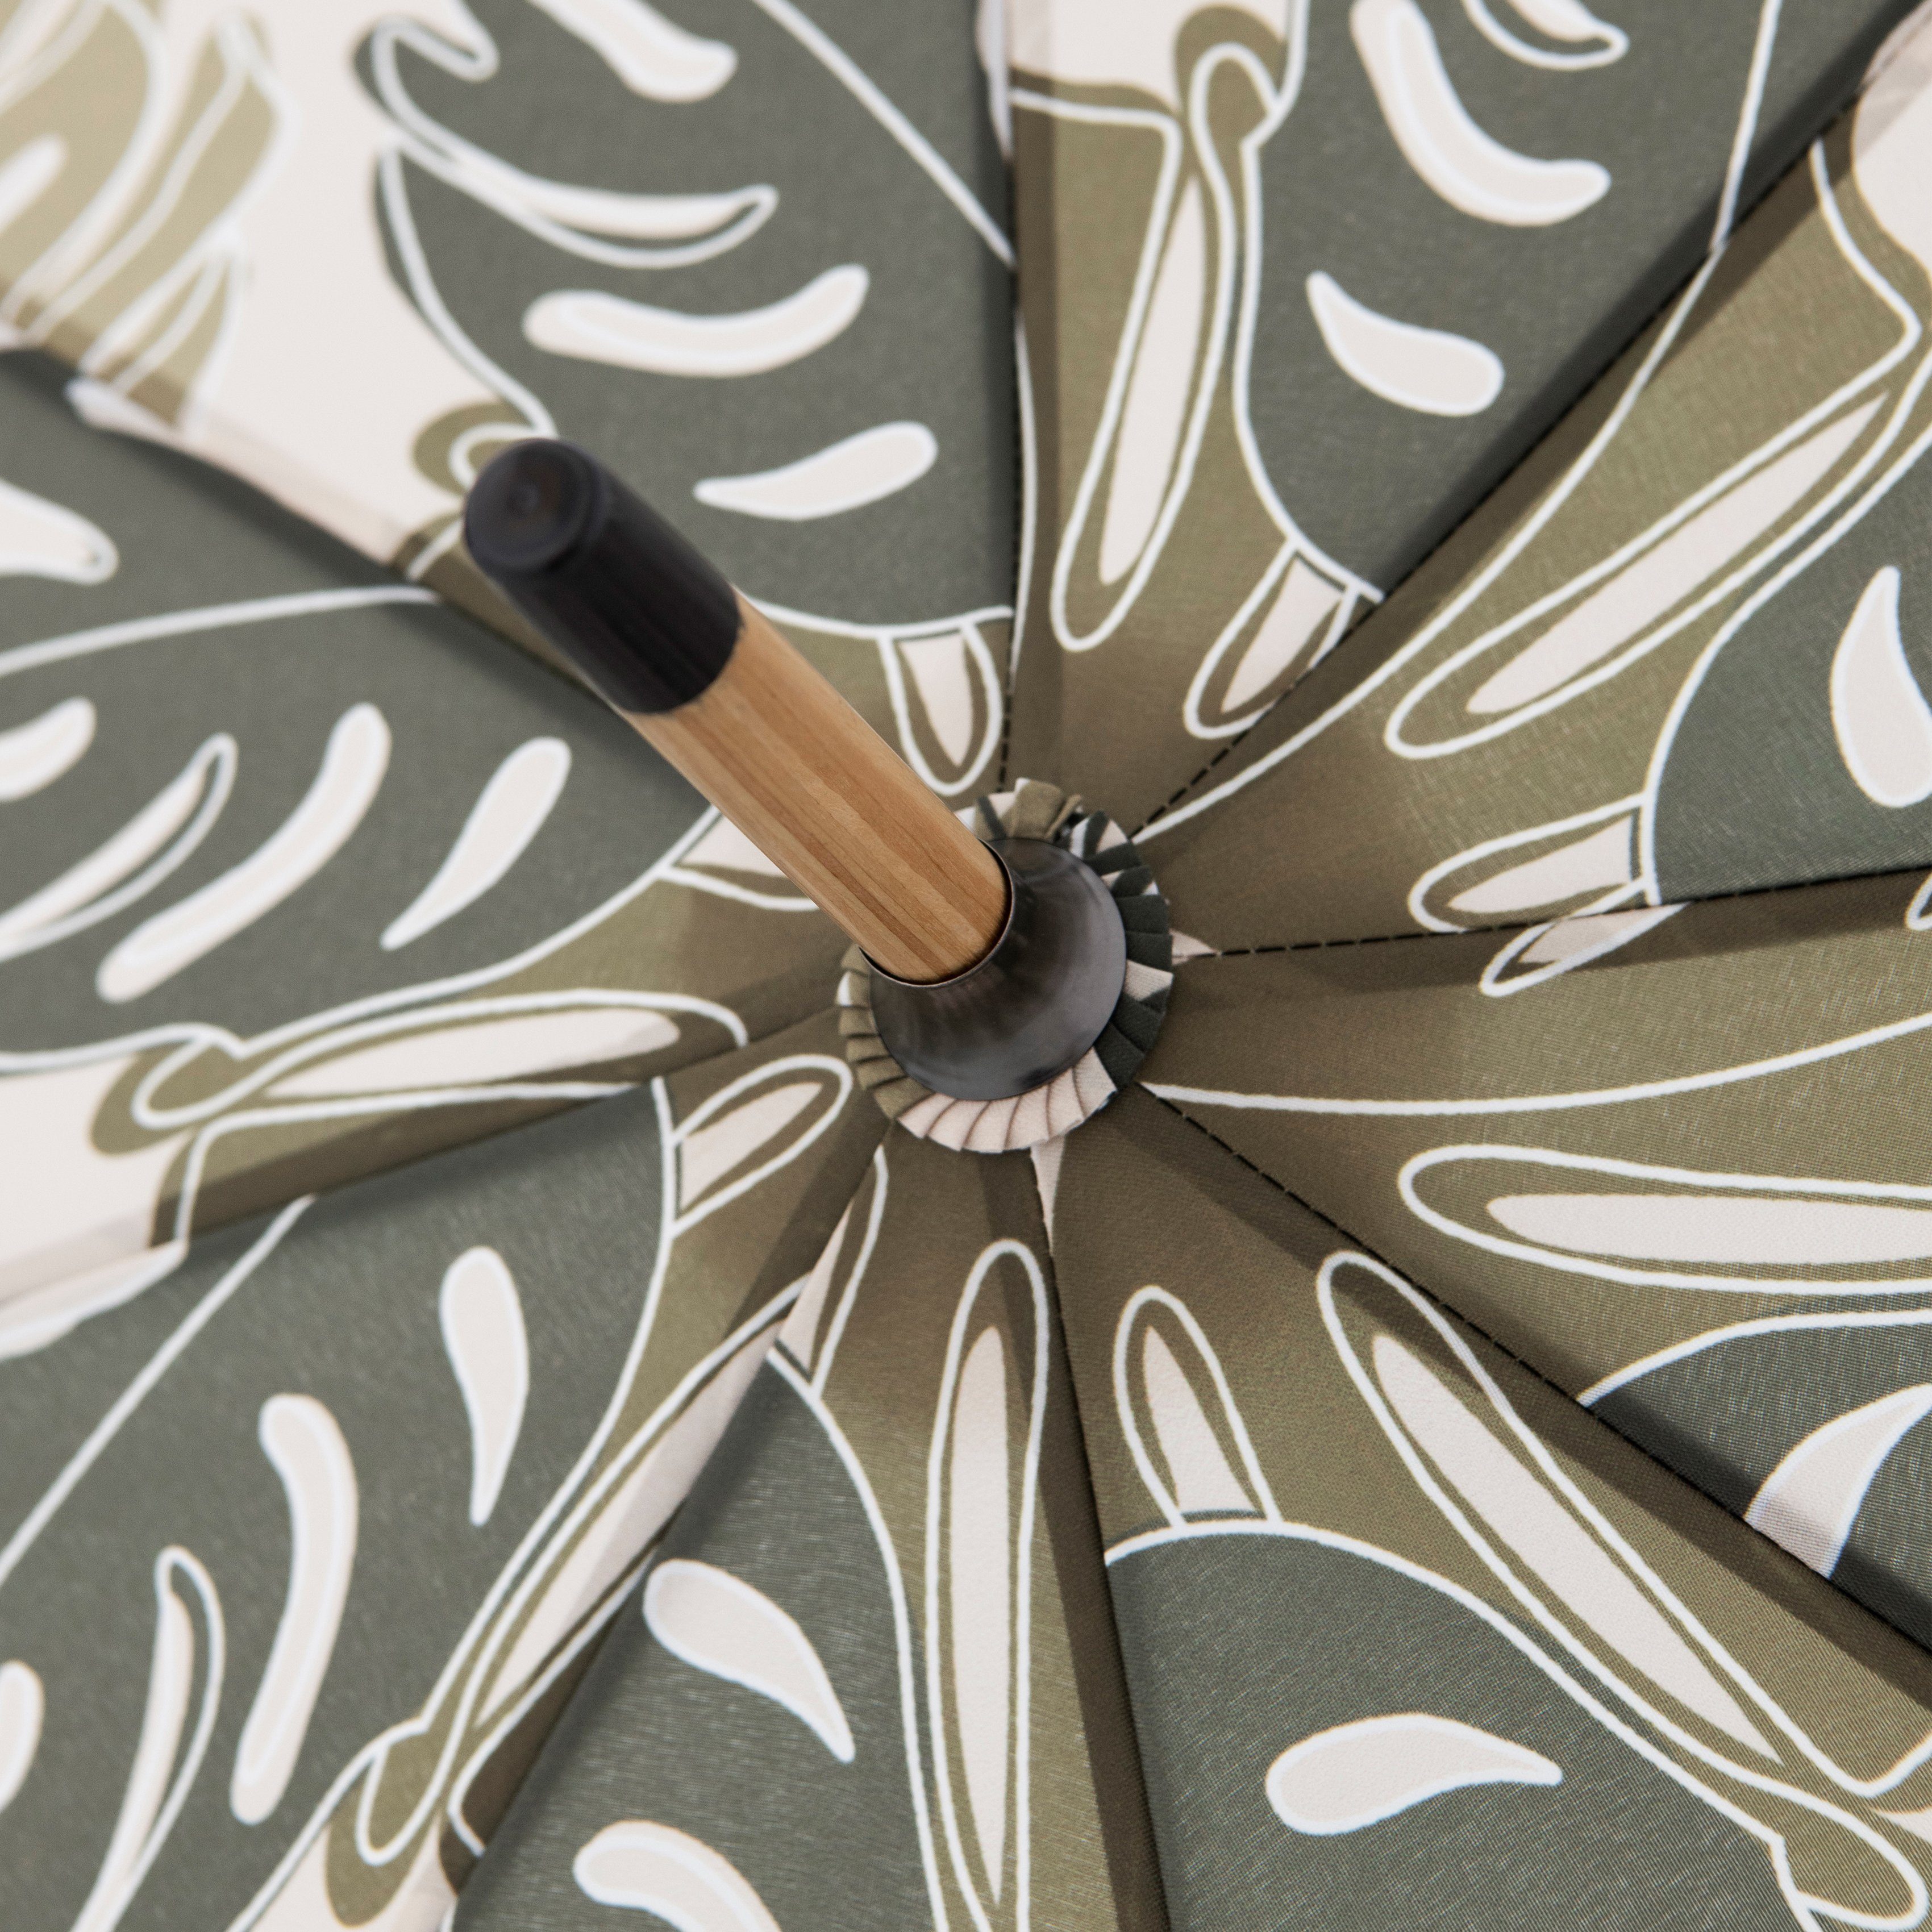 doppler® Stockregenschirm Holz mit aus nature aus Long, choice Material beige, Schirmgriff recyceltem